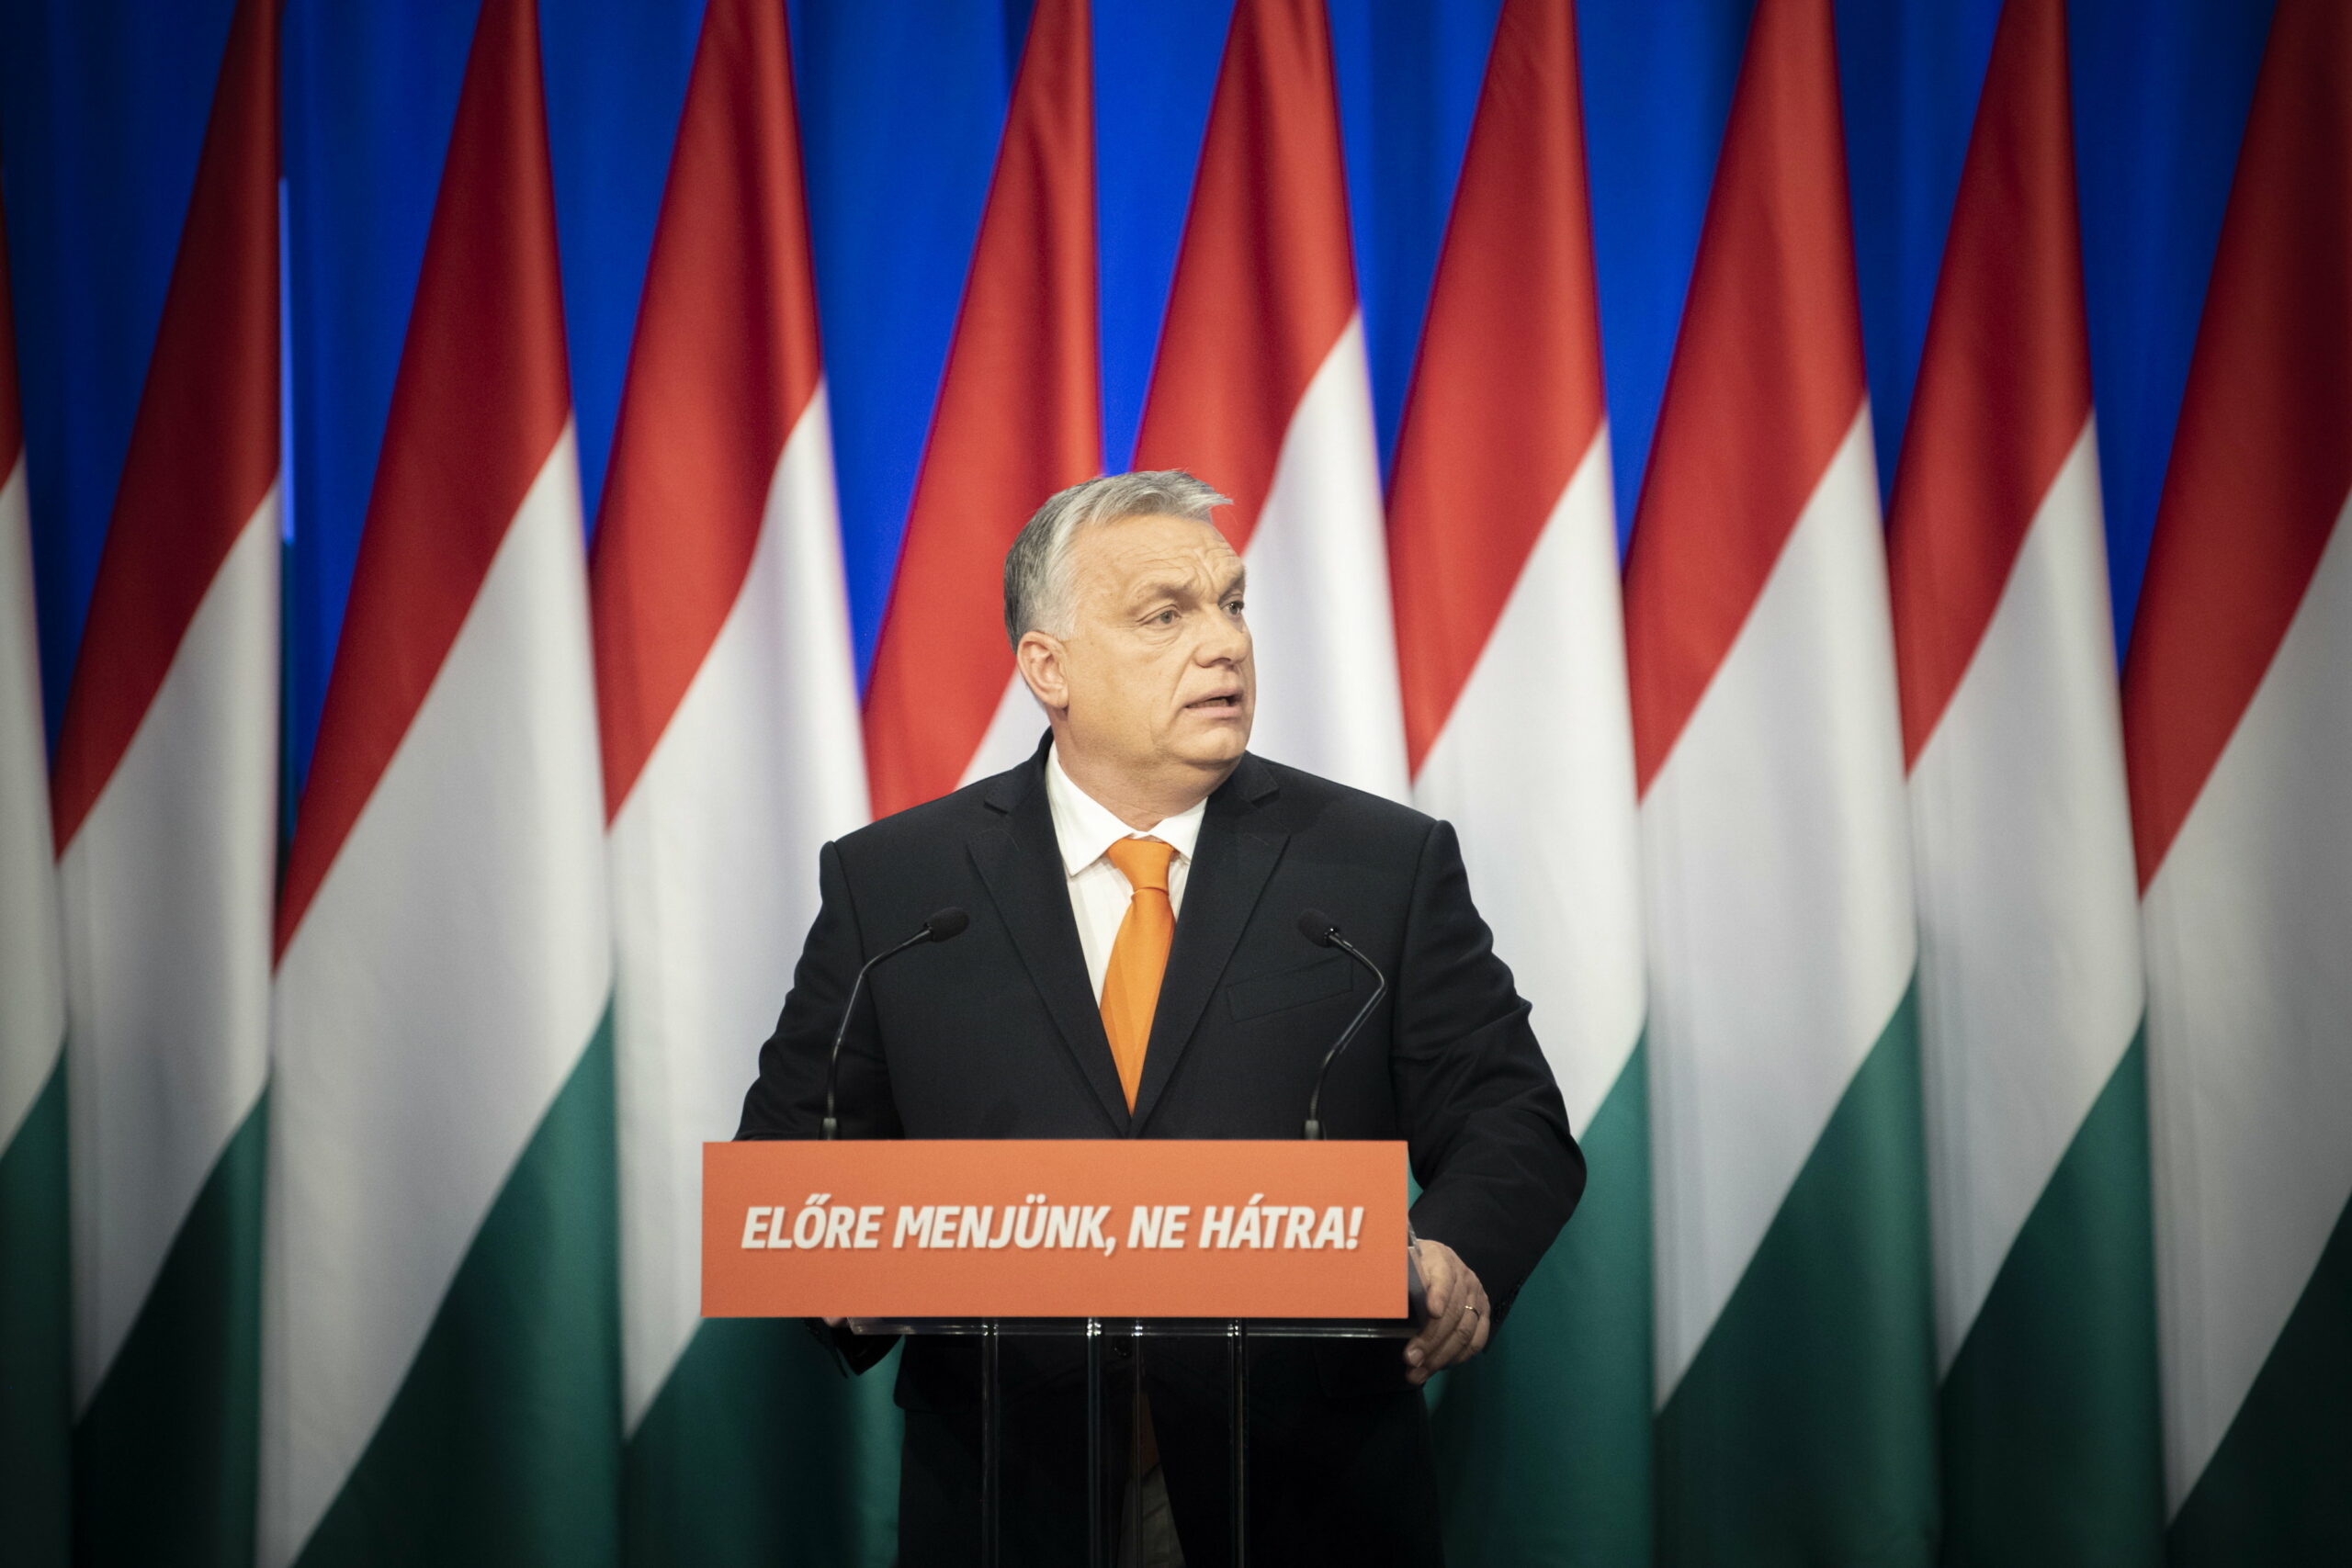 PM Orbán Lambasts Gyurcsány and Lists Gov't Achievements in Keynote Speech